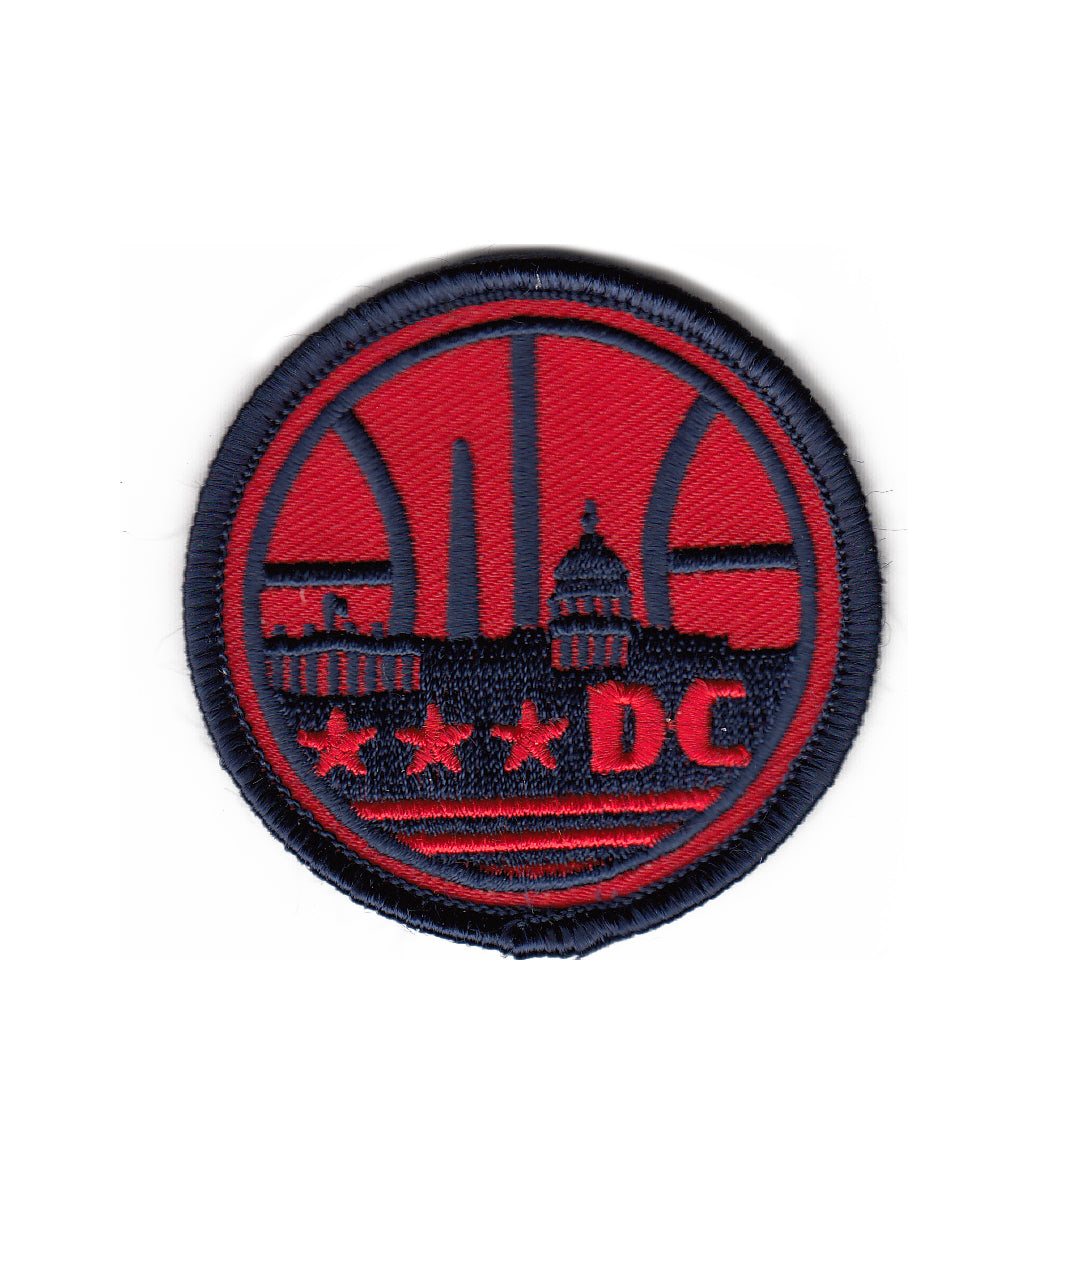 Washington DC Basketball Patch